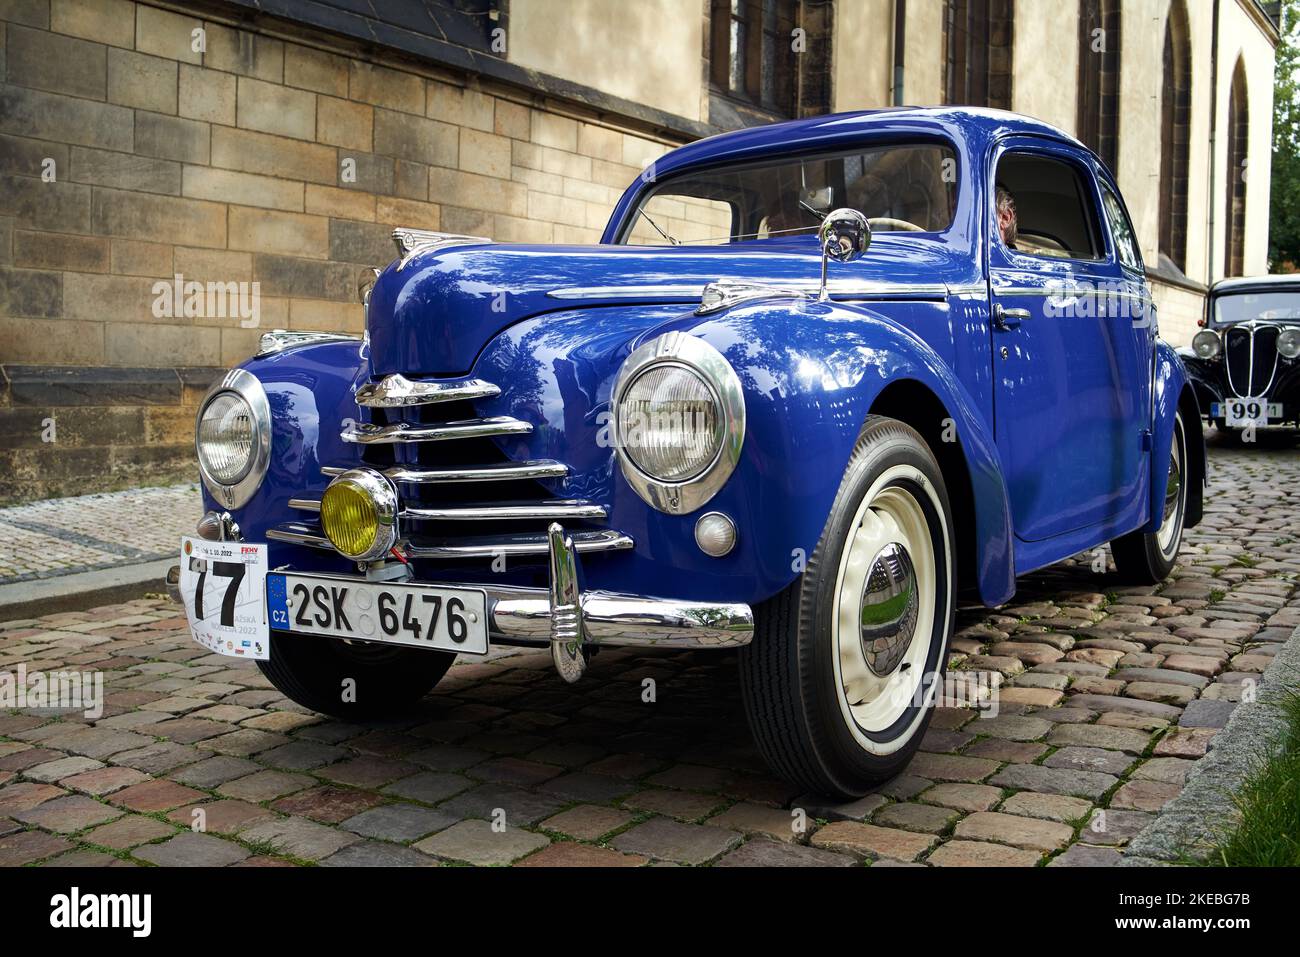 PRAGUE, CZECH REPUBLIC - OCTOBER 1, 2022: Vintage blue Skoda car at the Prazska Noblesa event Stock Photo